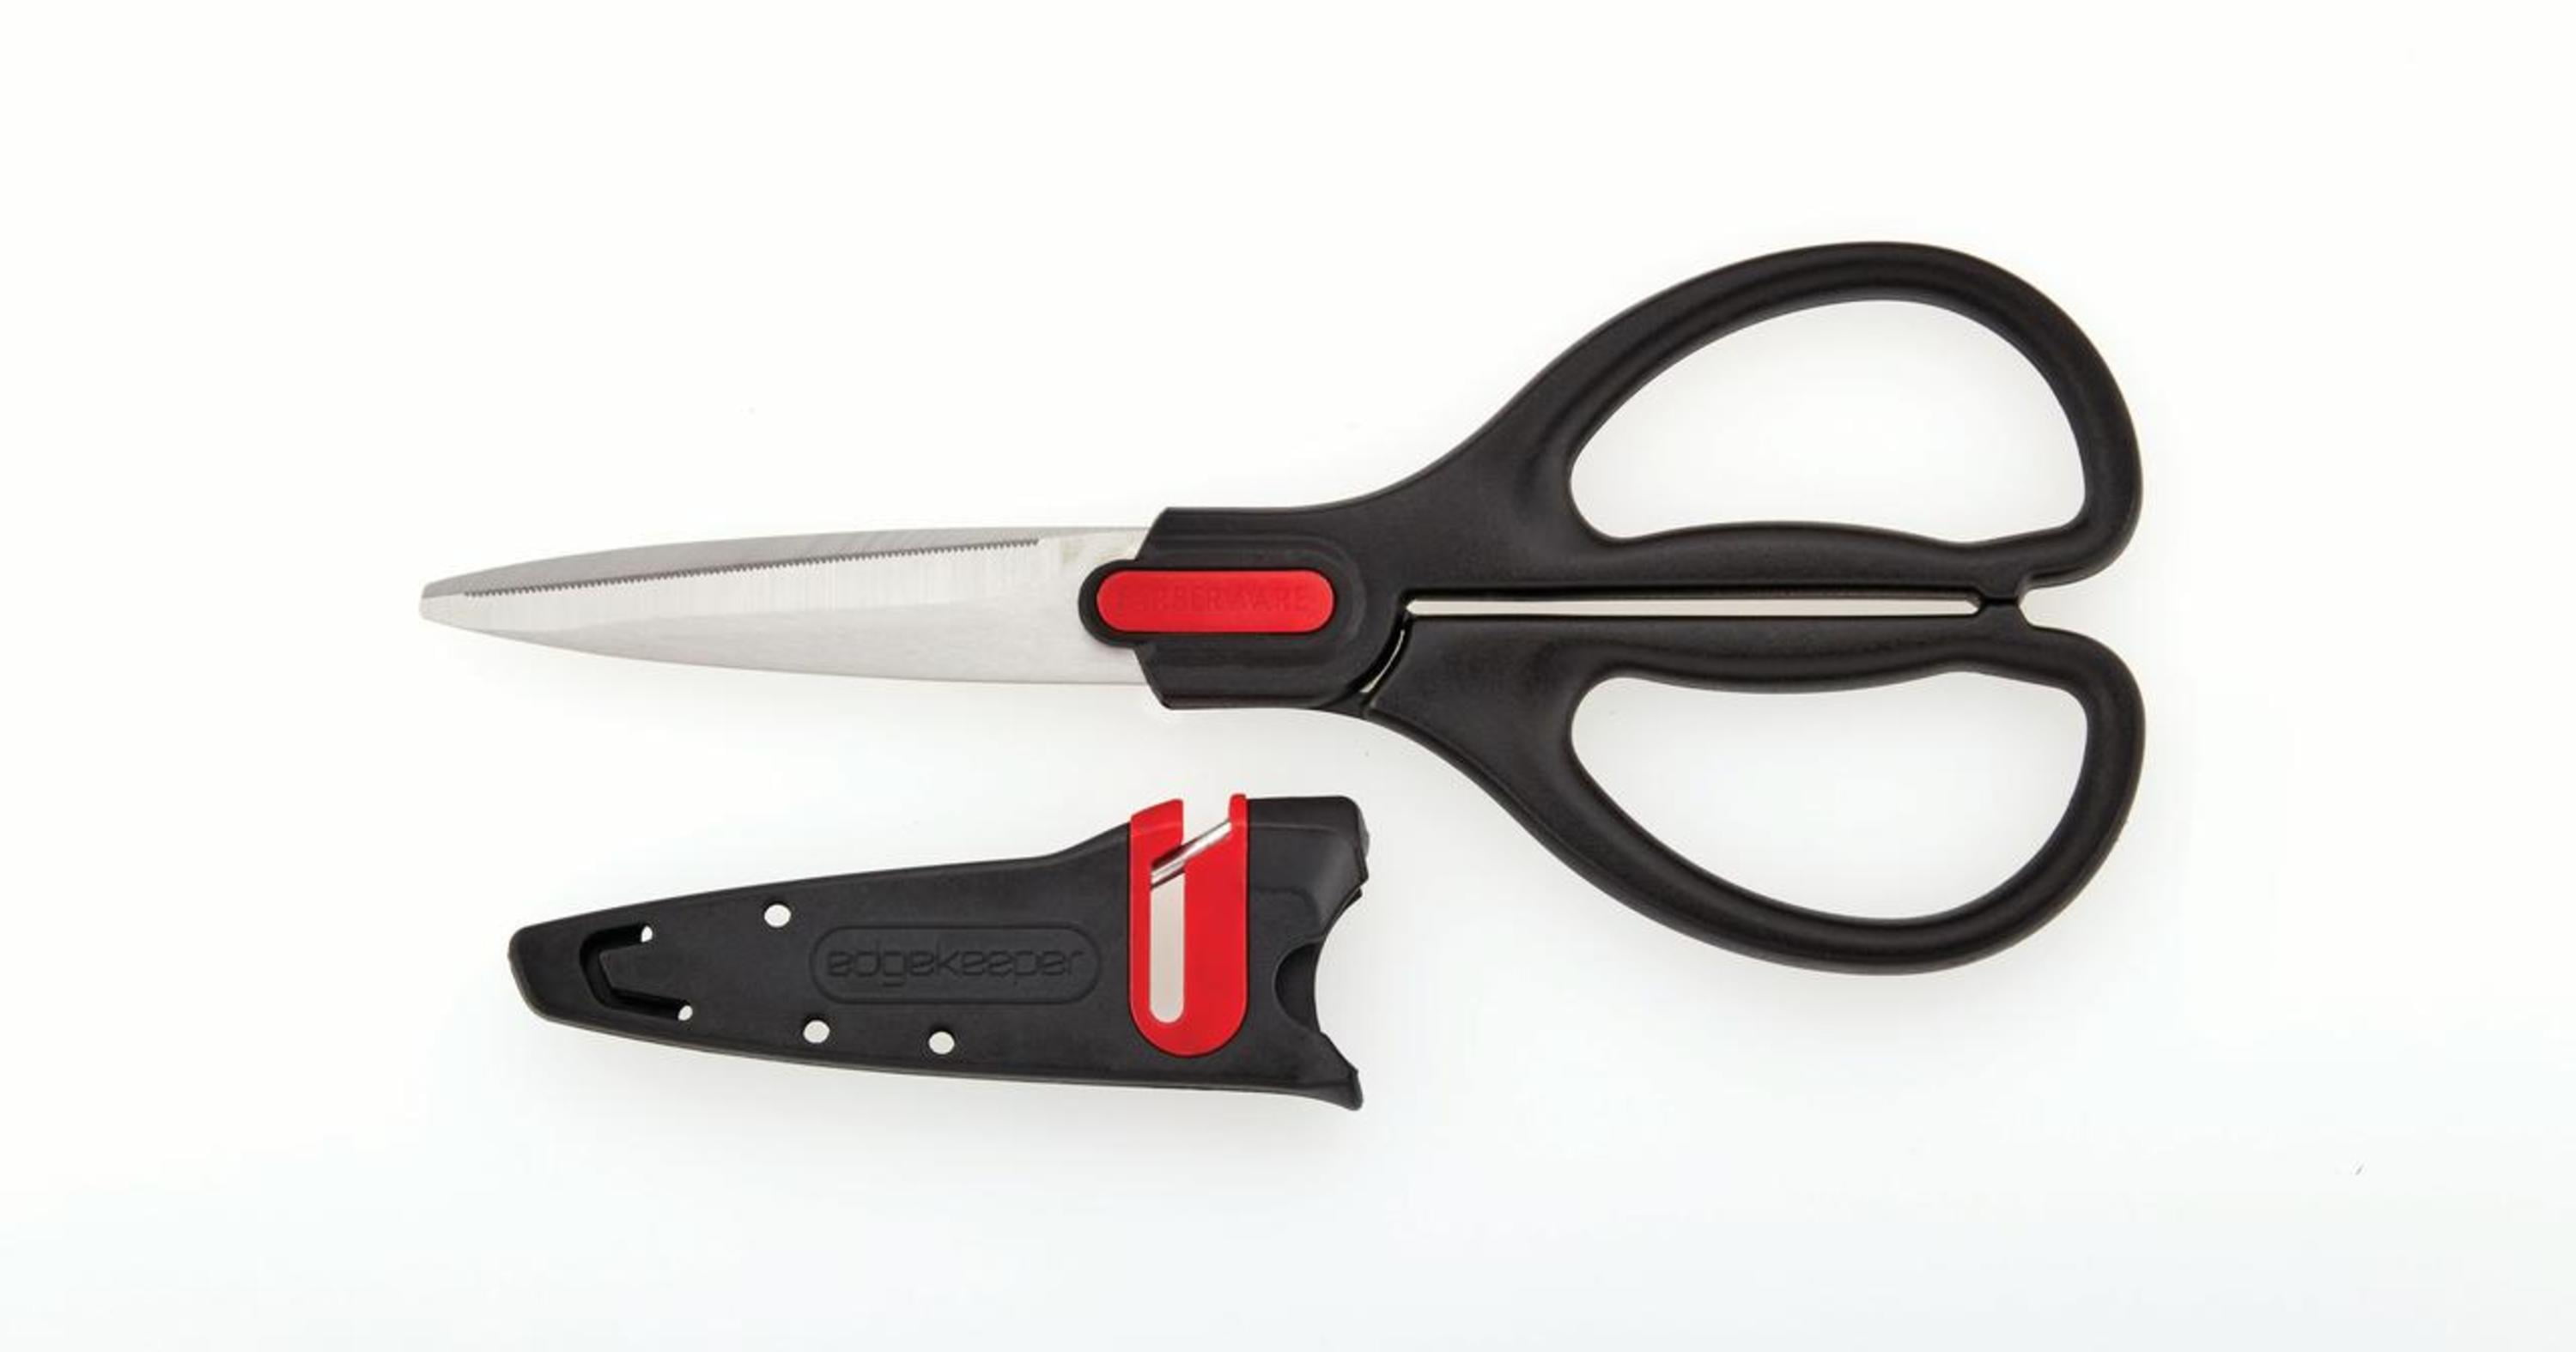 Farberware Edgekeeper З 1/2 Inch Paring Knife with Self Sharpening